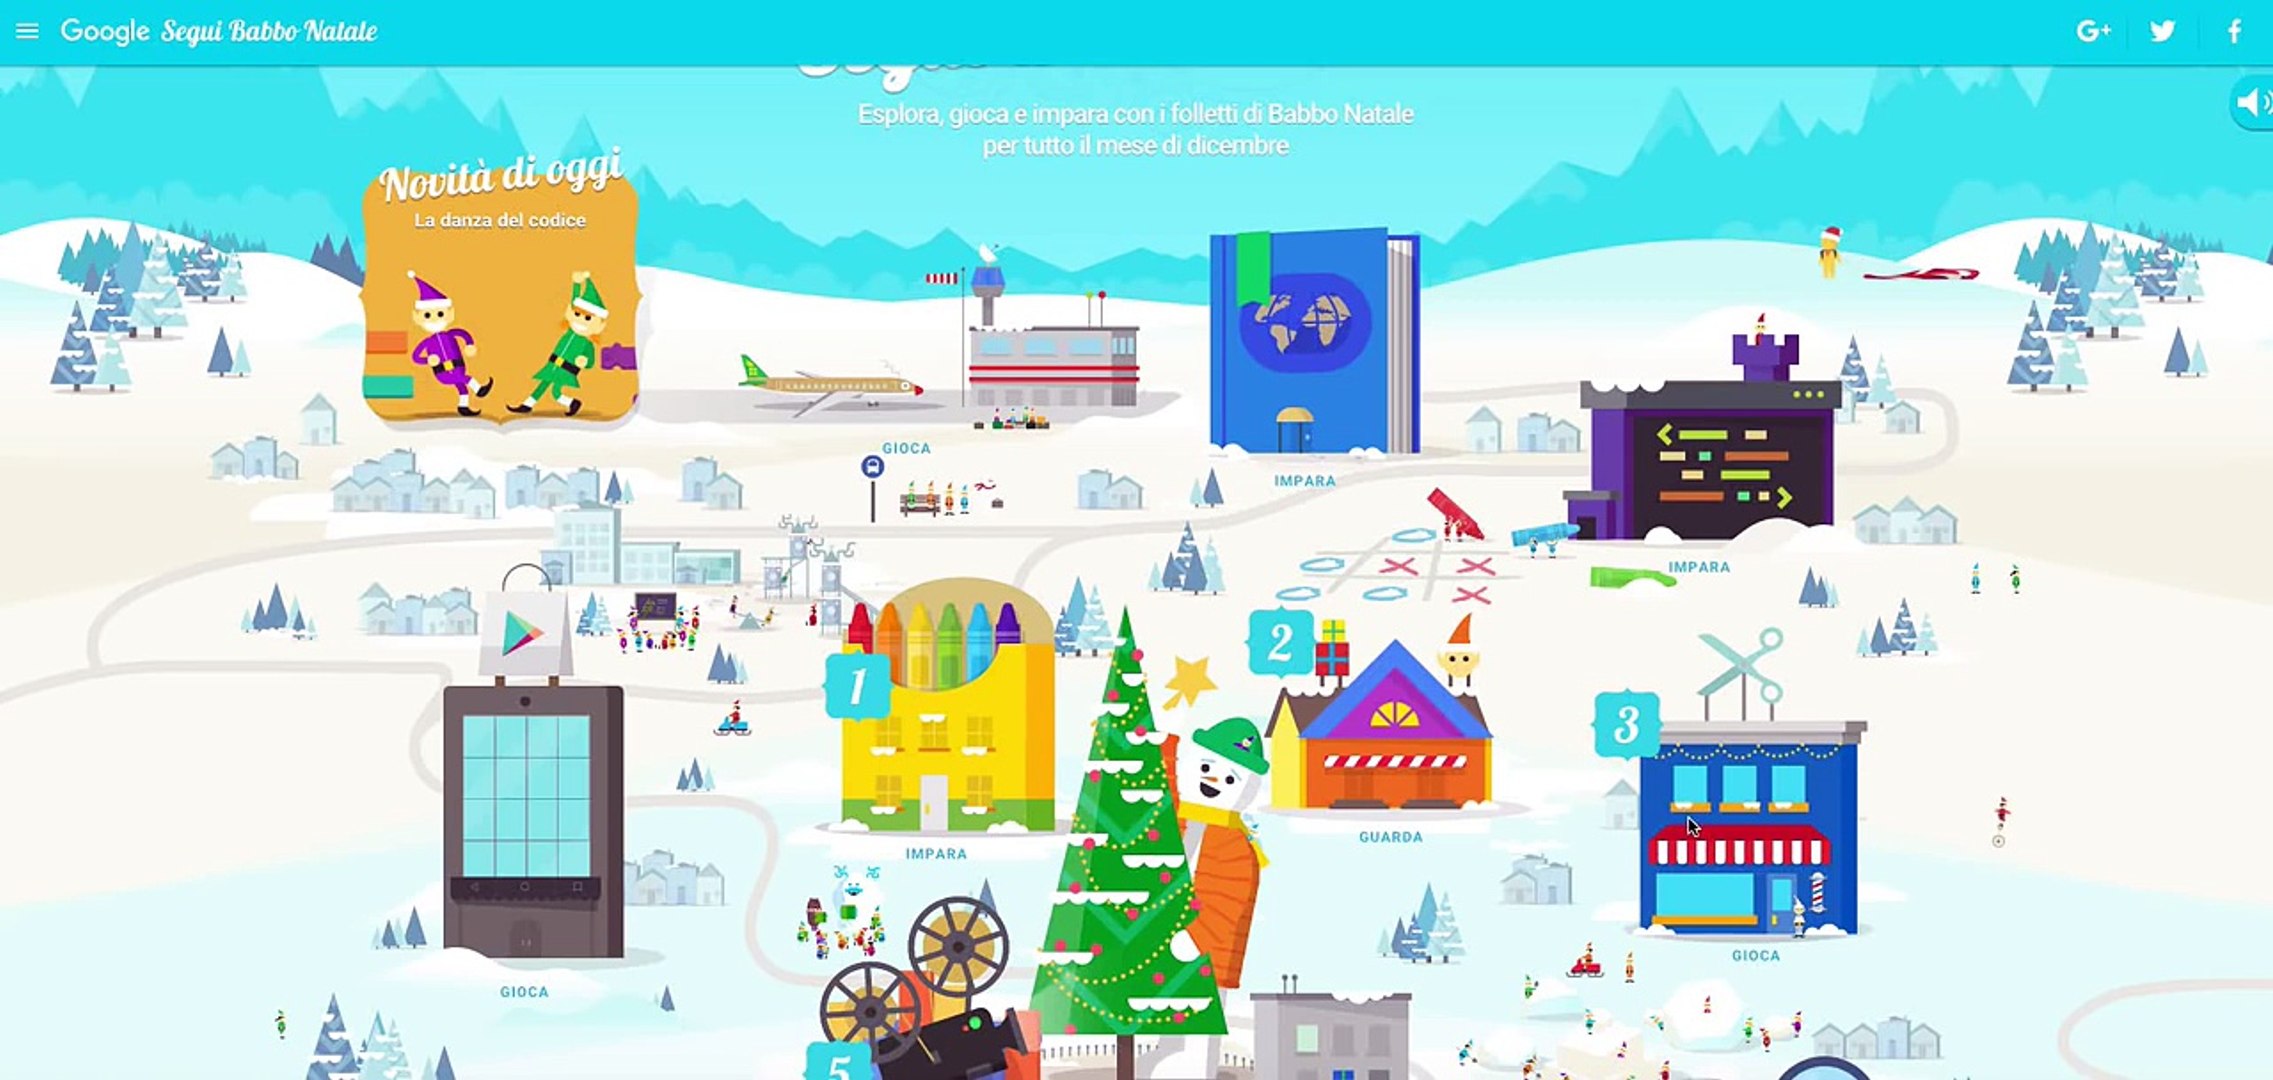 Babbo Natale Google.Google Santa Tracker New Day 3 Santa Selfie Selfie Con Babbo Natale Hd Online Game Video Dailymotion